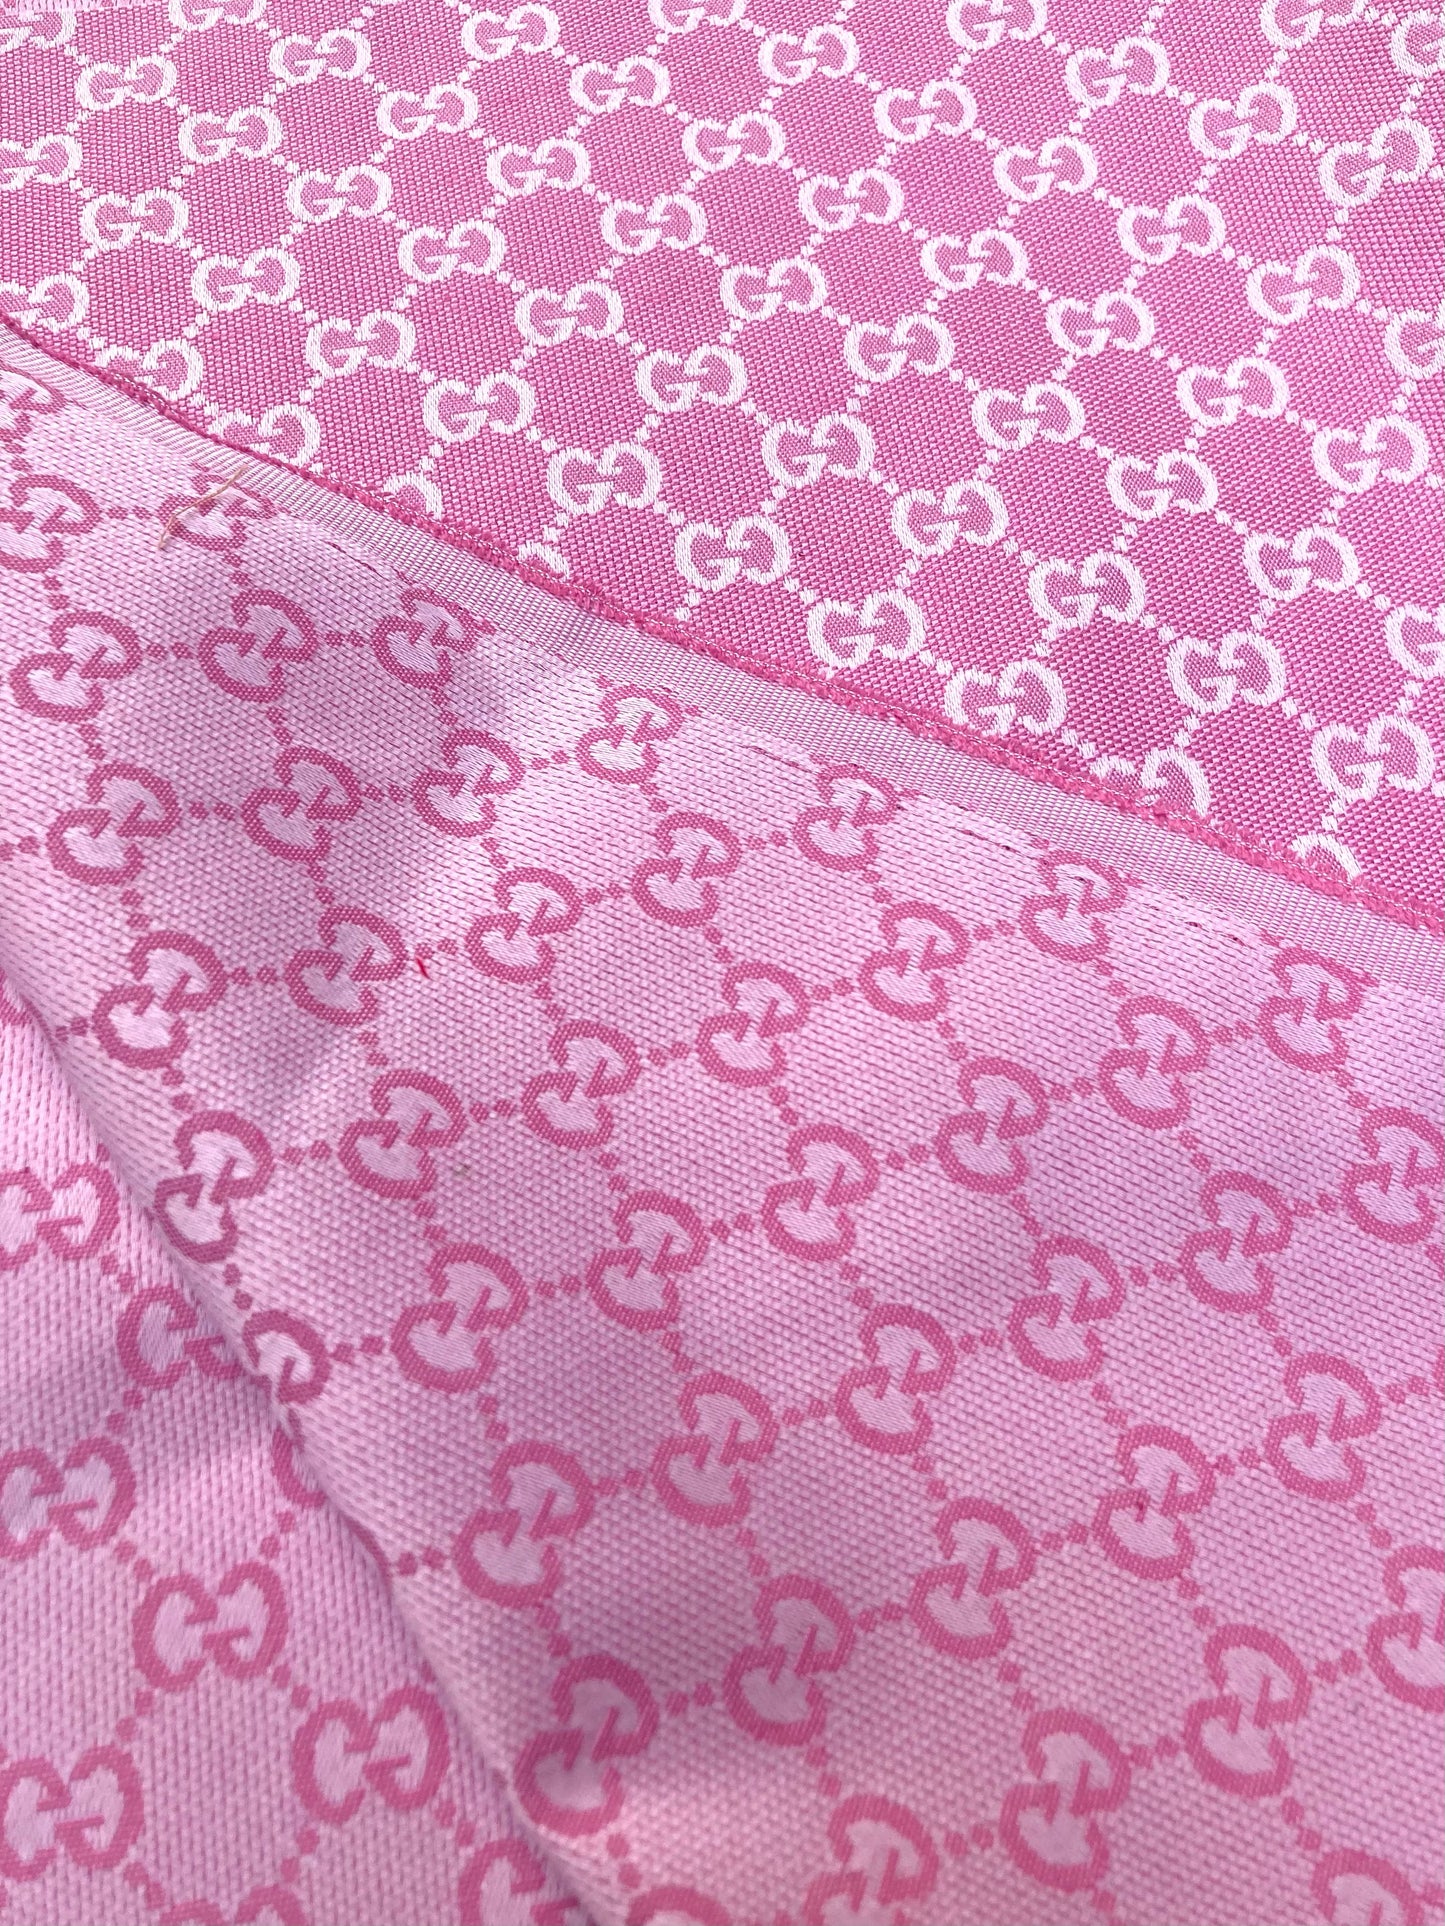 Barbie Pink GG Fabric for Custom DIY Handmade